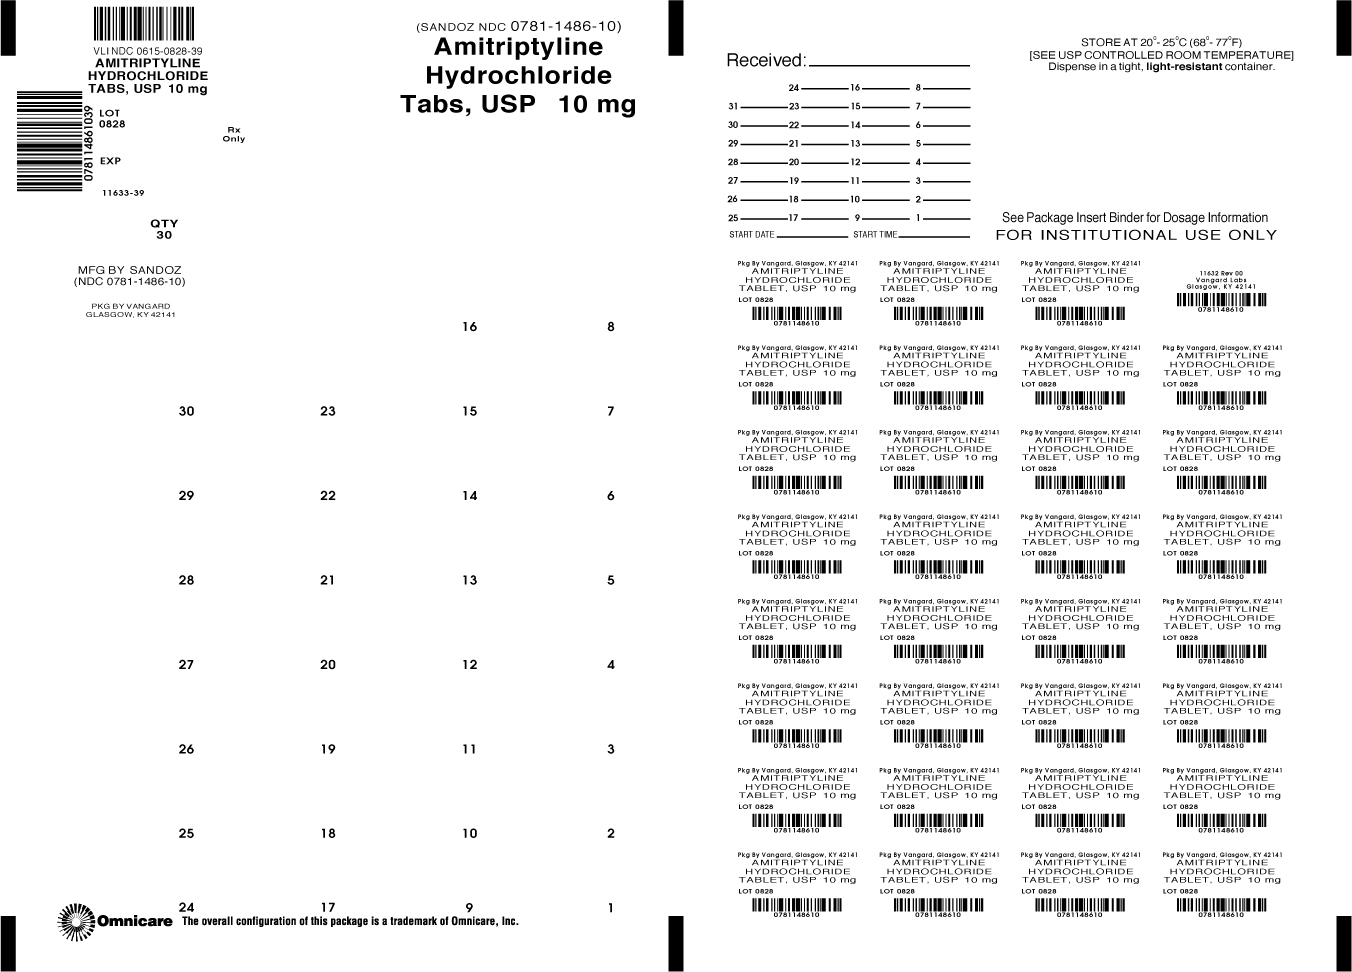 Principal Display Panel-Amitriptyline Hydrochloride Tablets, USP 10mg